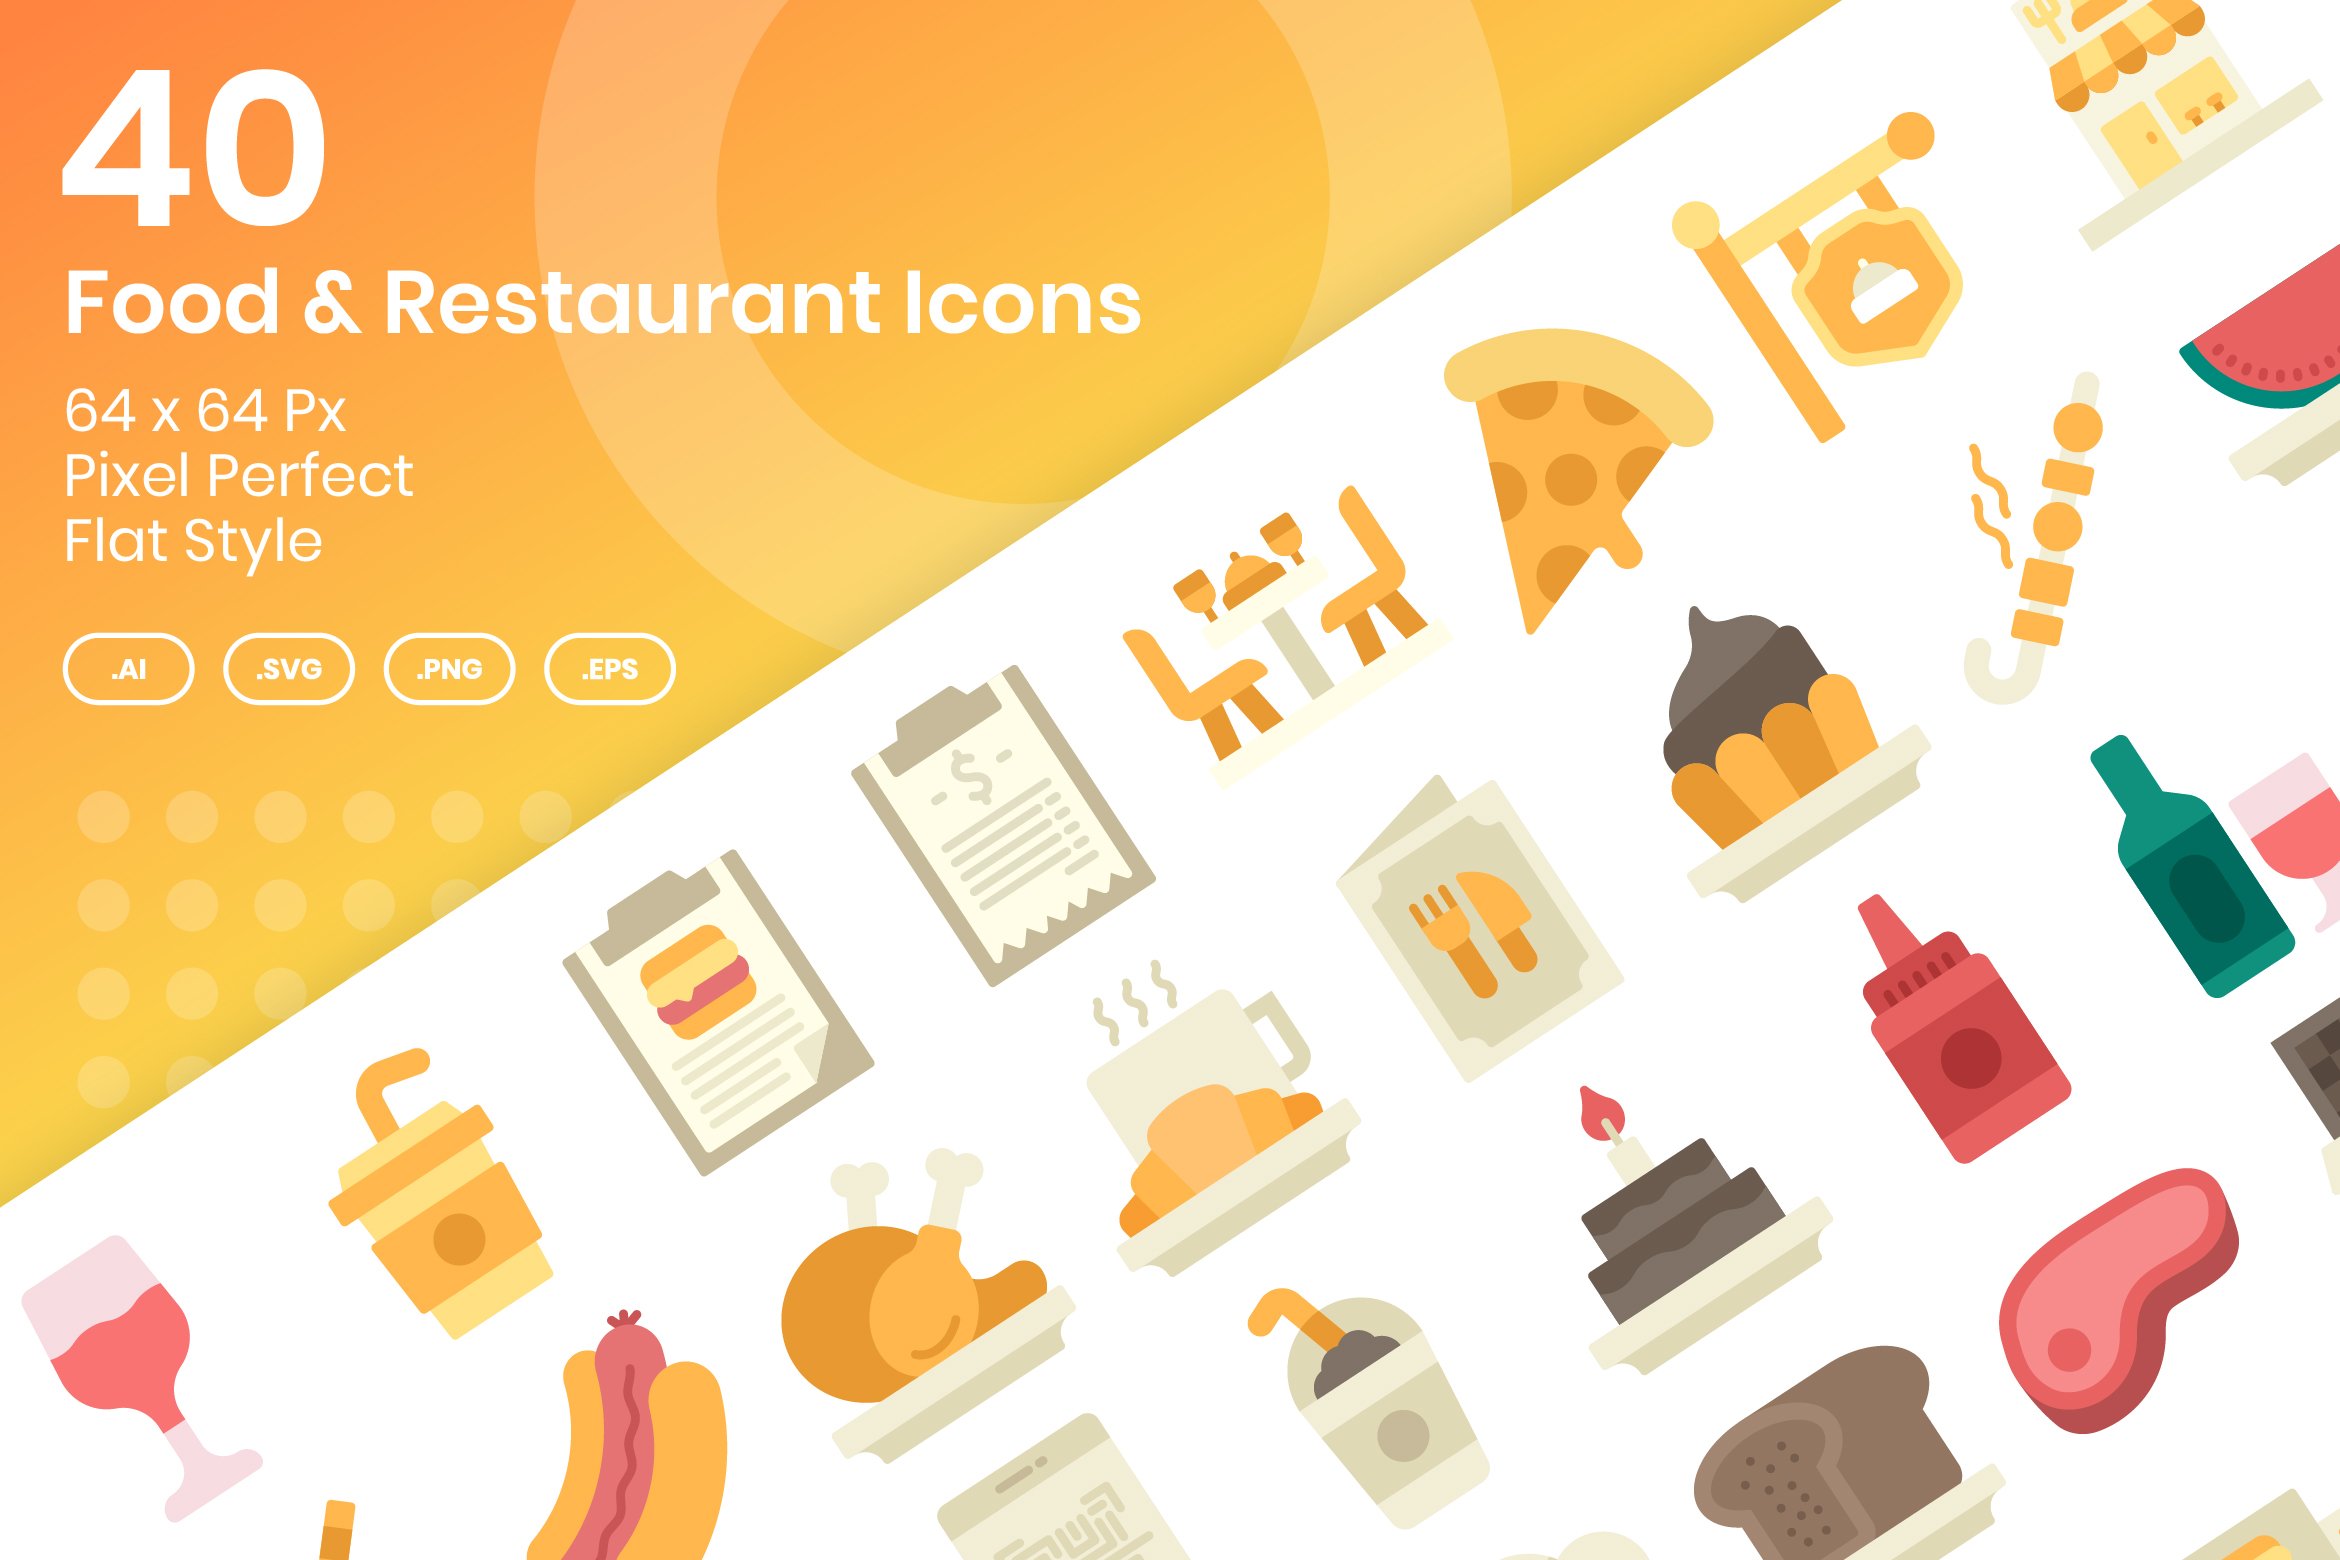 40 Food & Restaurant - Flat cover image.